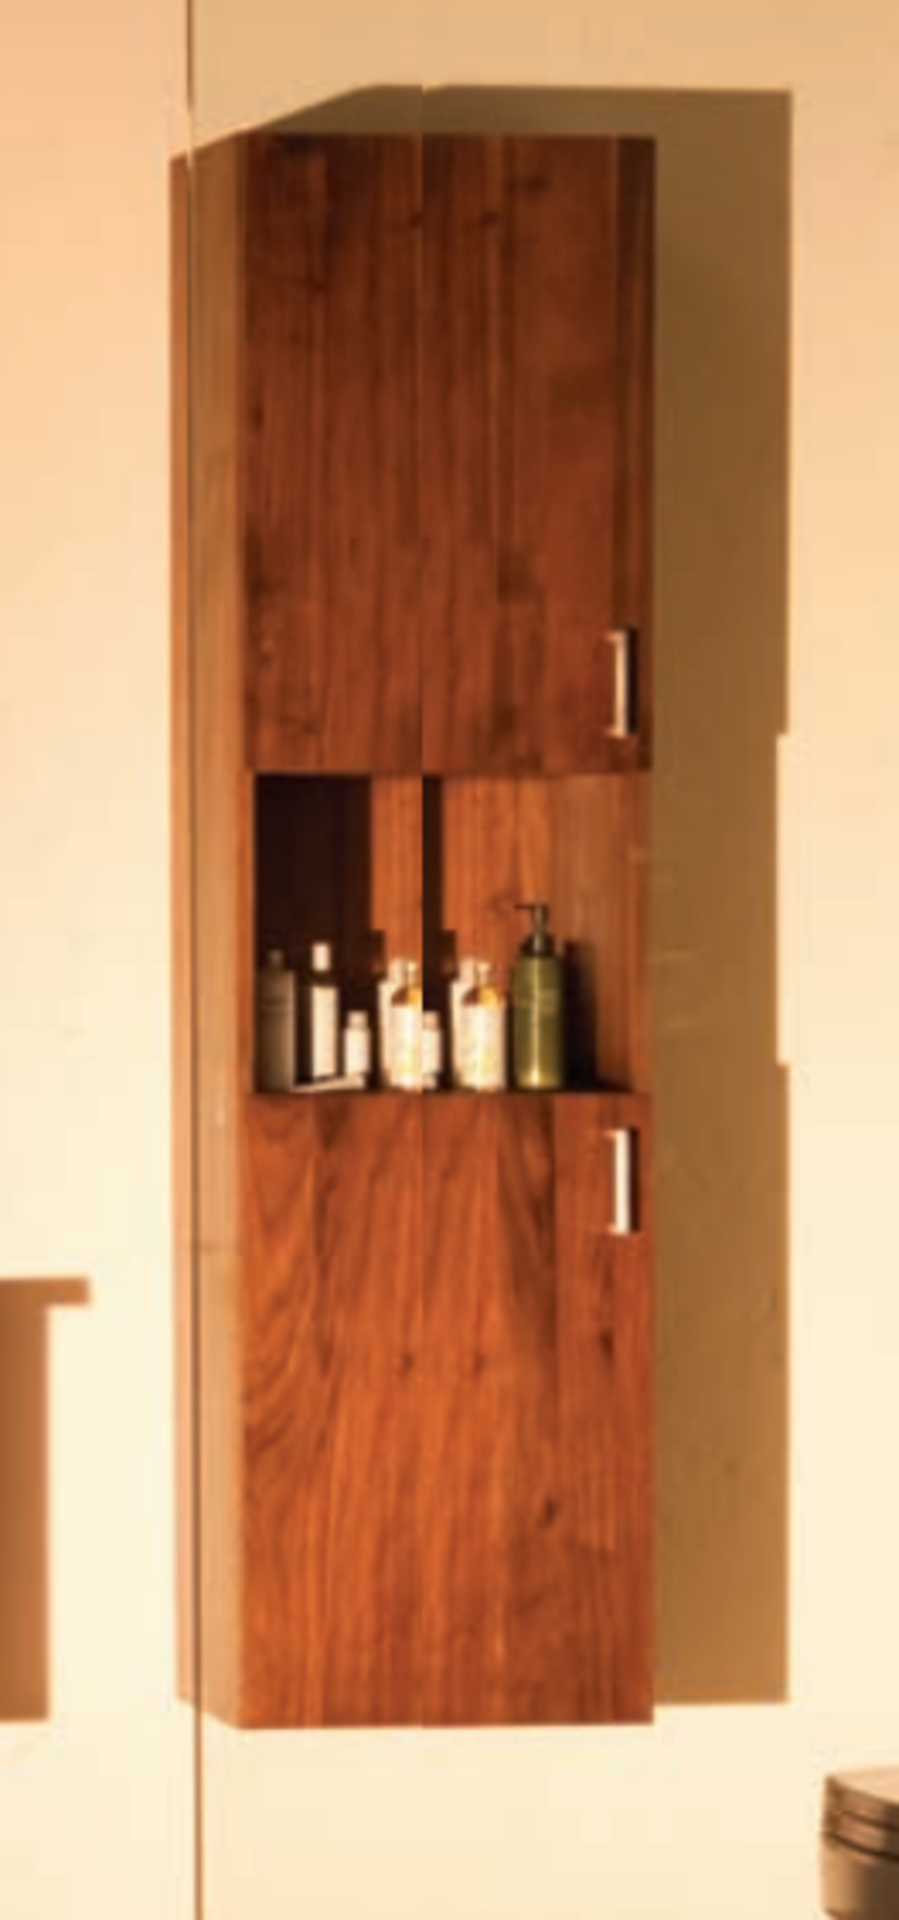 1 x Stonearth Wall Hung Tallboy Bathroom Storage Cabinet - American Solid Walnut - Original RRP £996 - Image 4 of 10